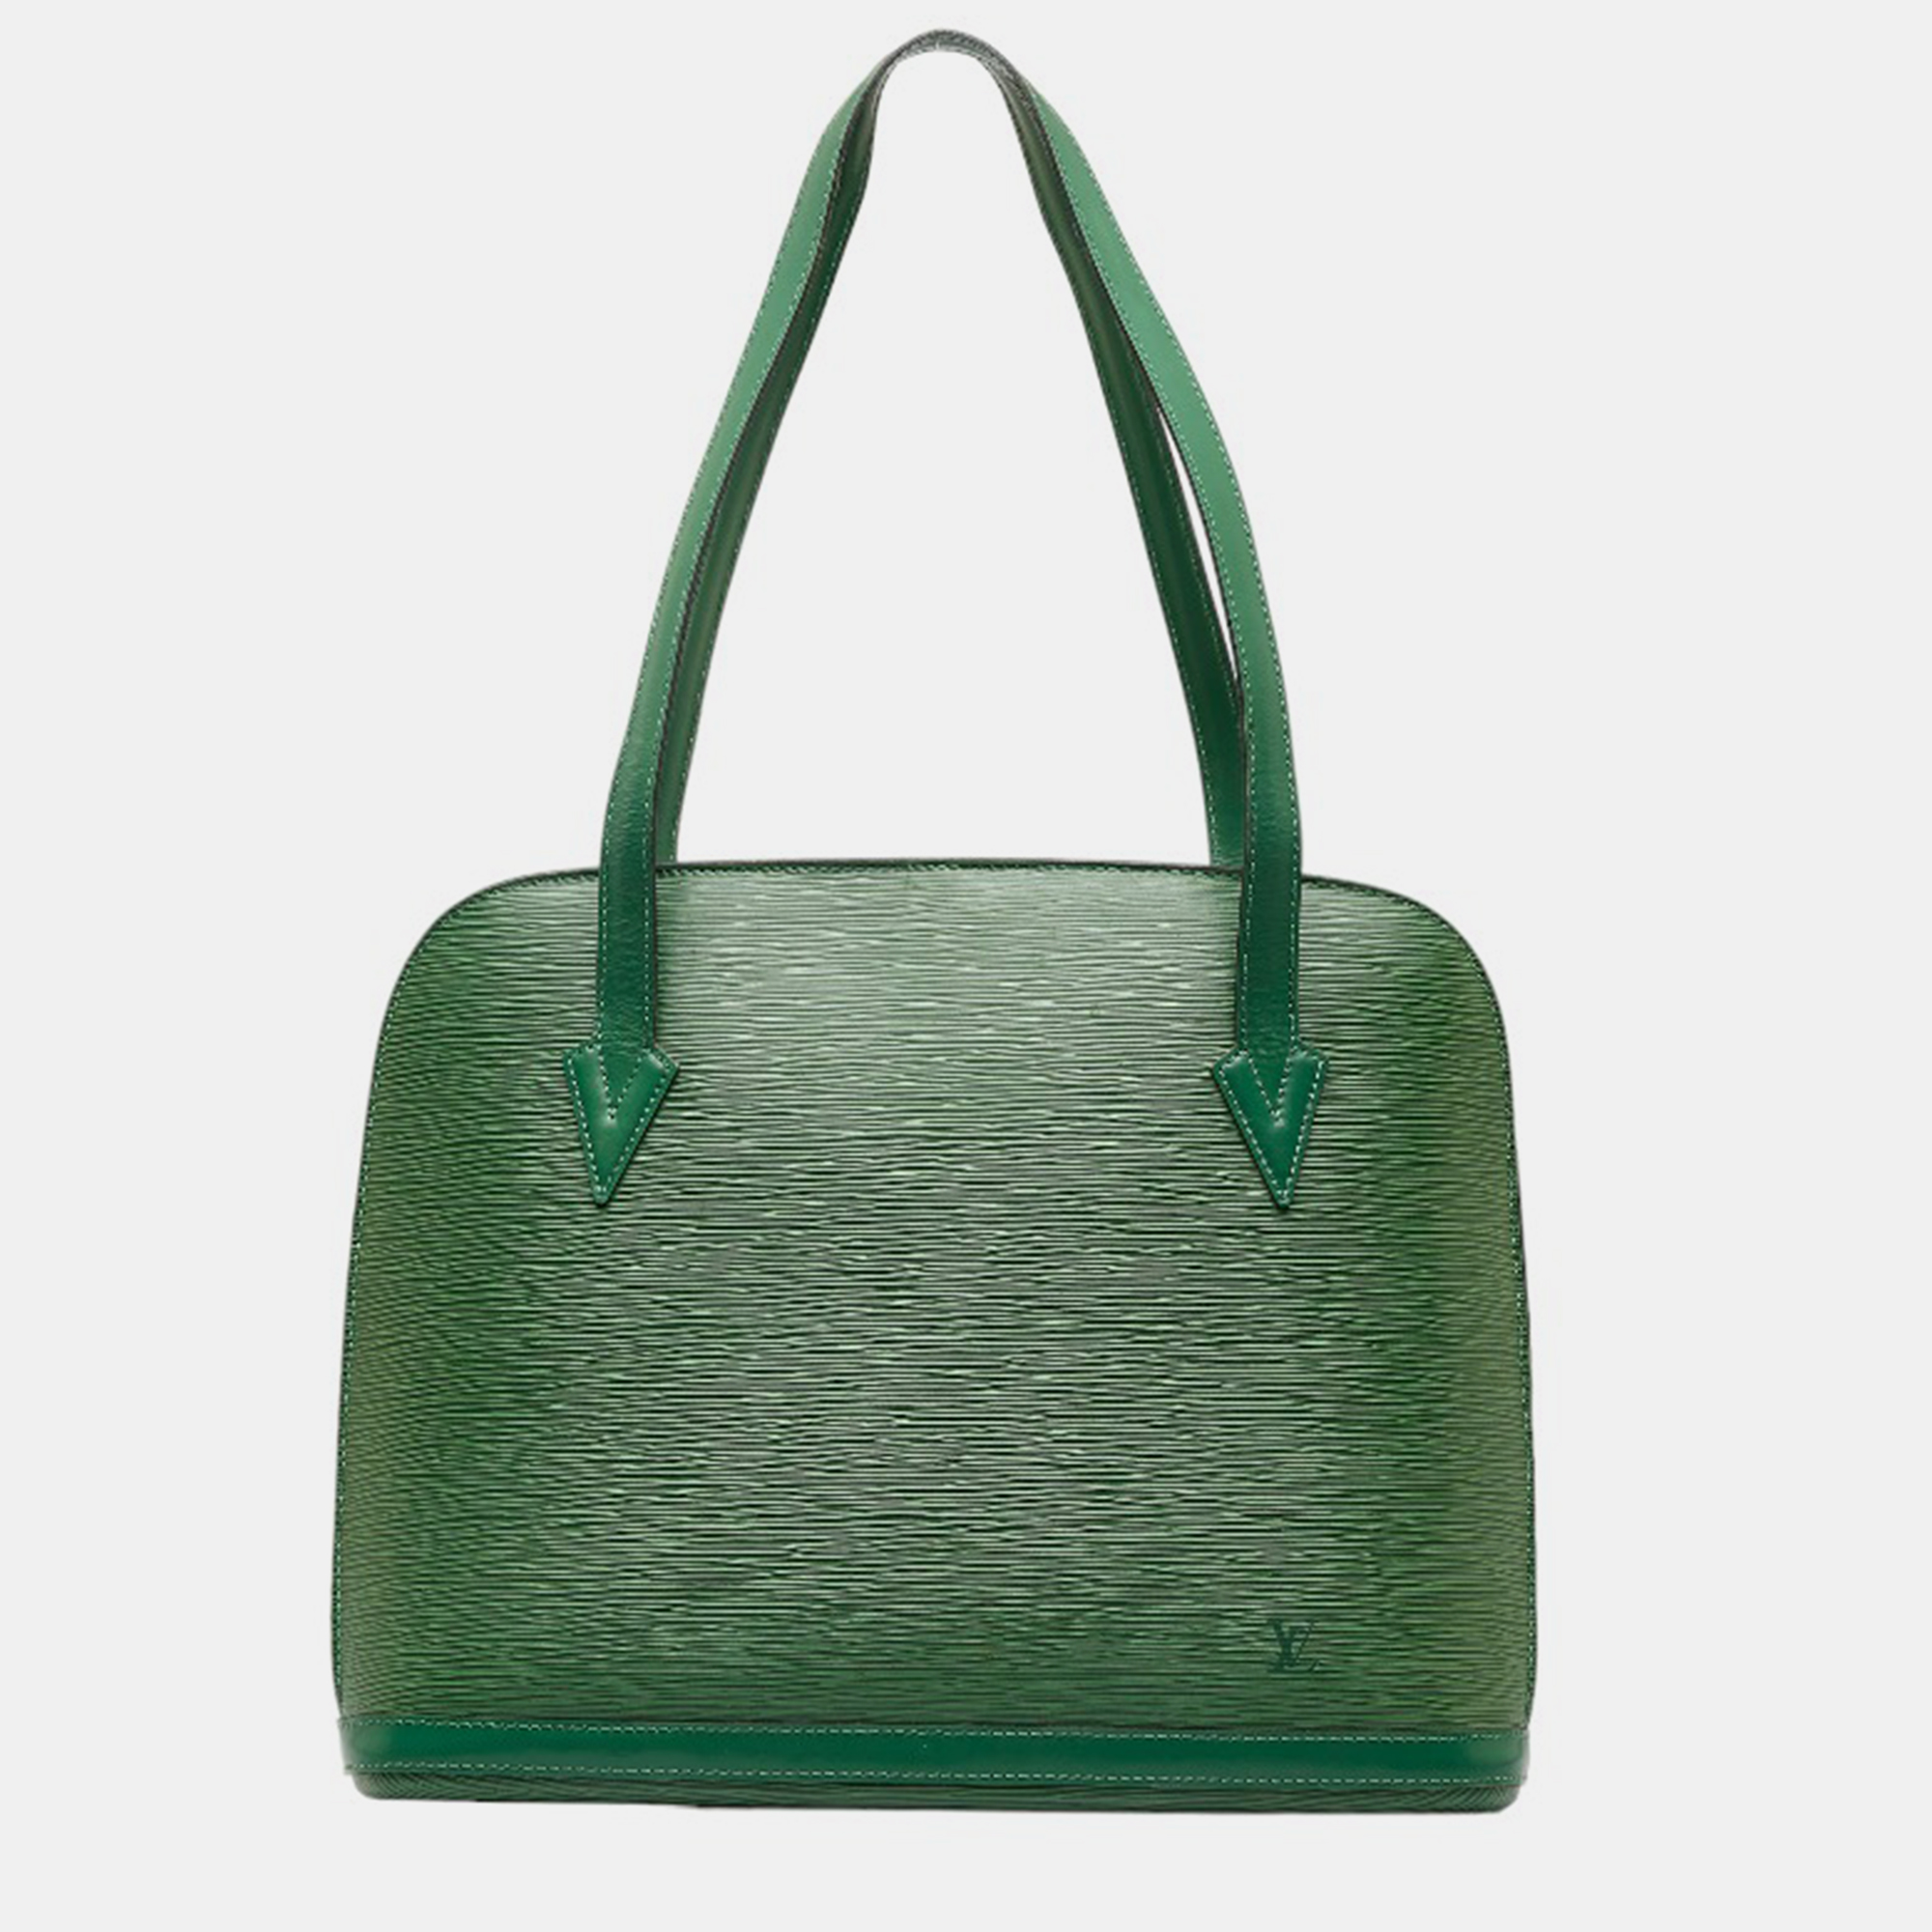 Louis vuitton green leather epi lussac tote bag